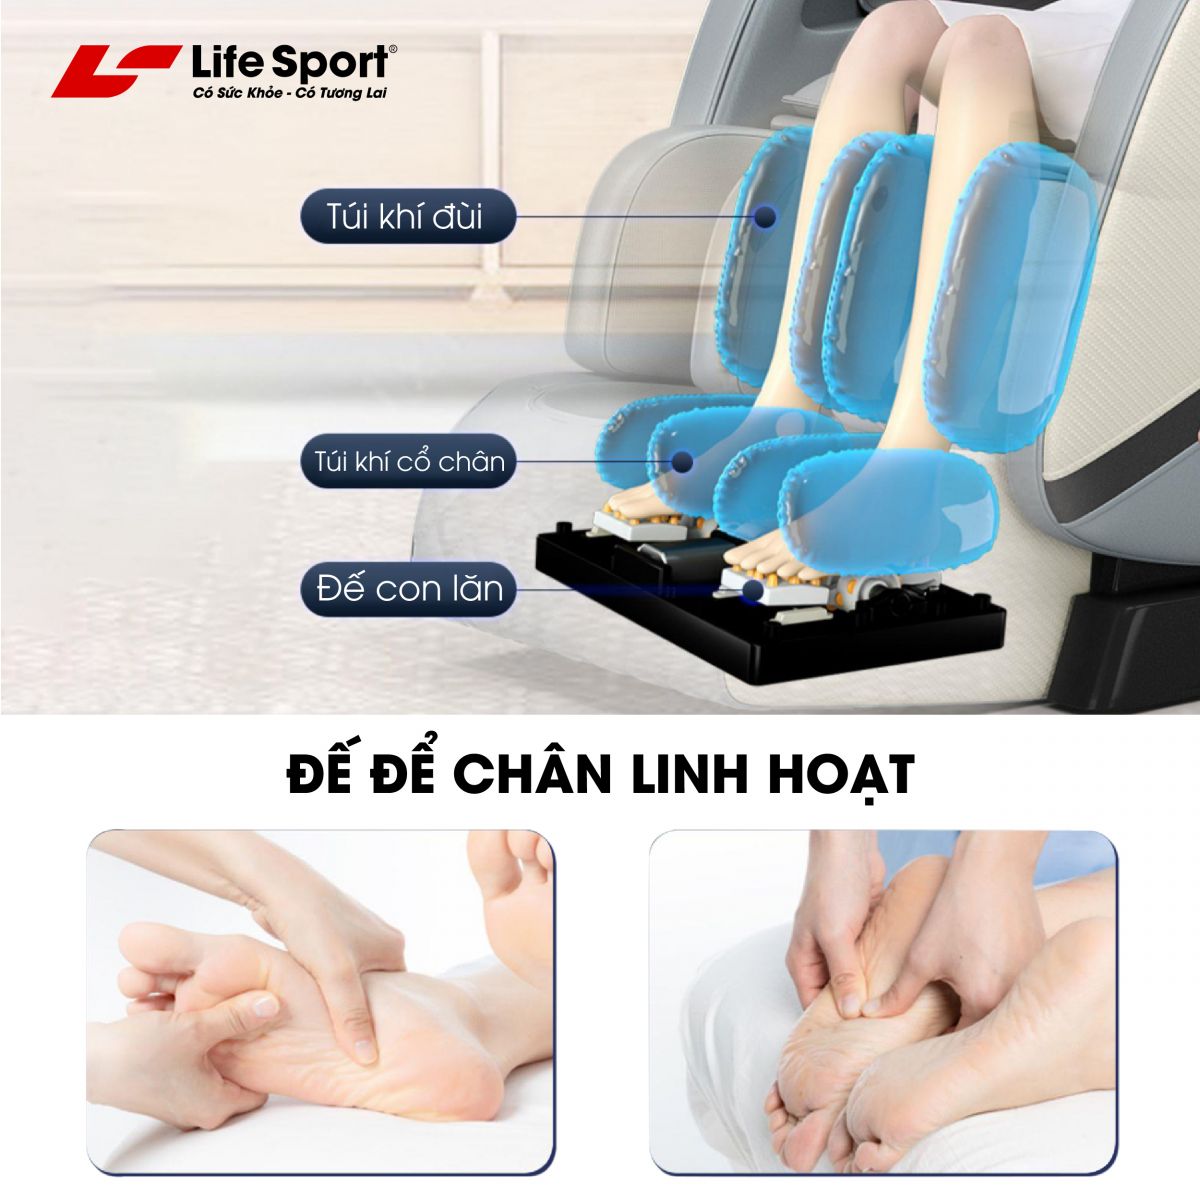 Ghế massage Lifesport LS-900 - Giảm 19,5 triệu đồng